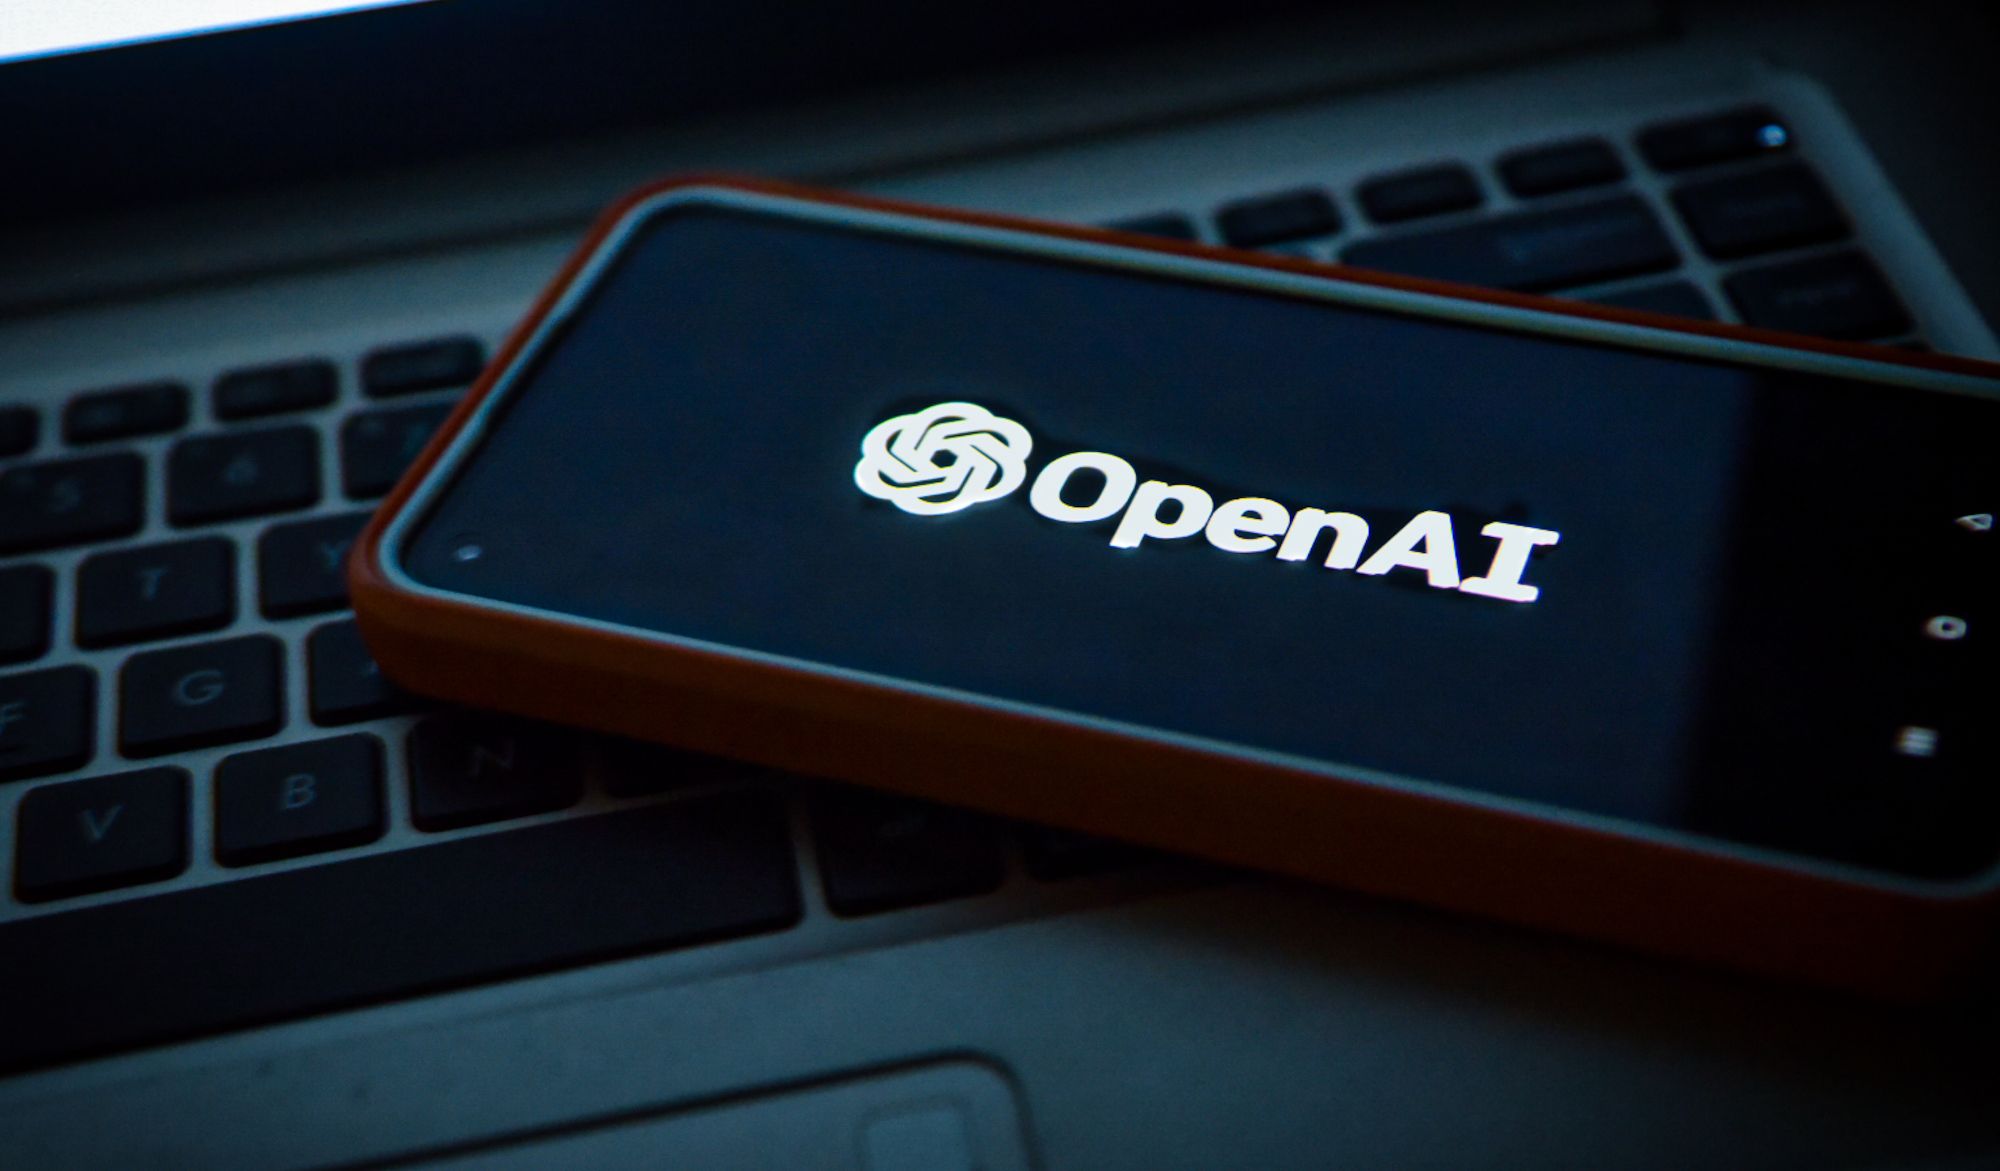 openai logo on smartphone place on laptop